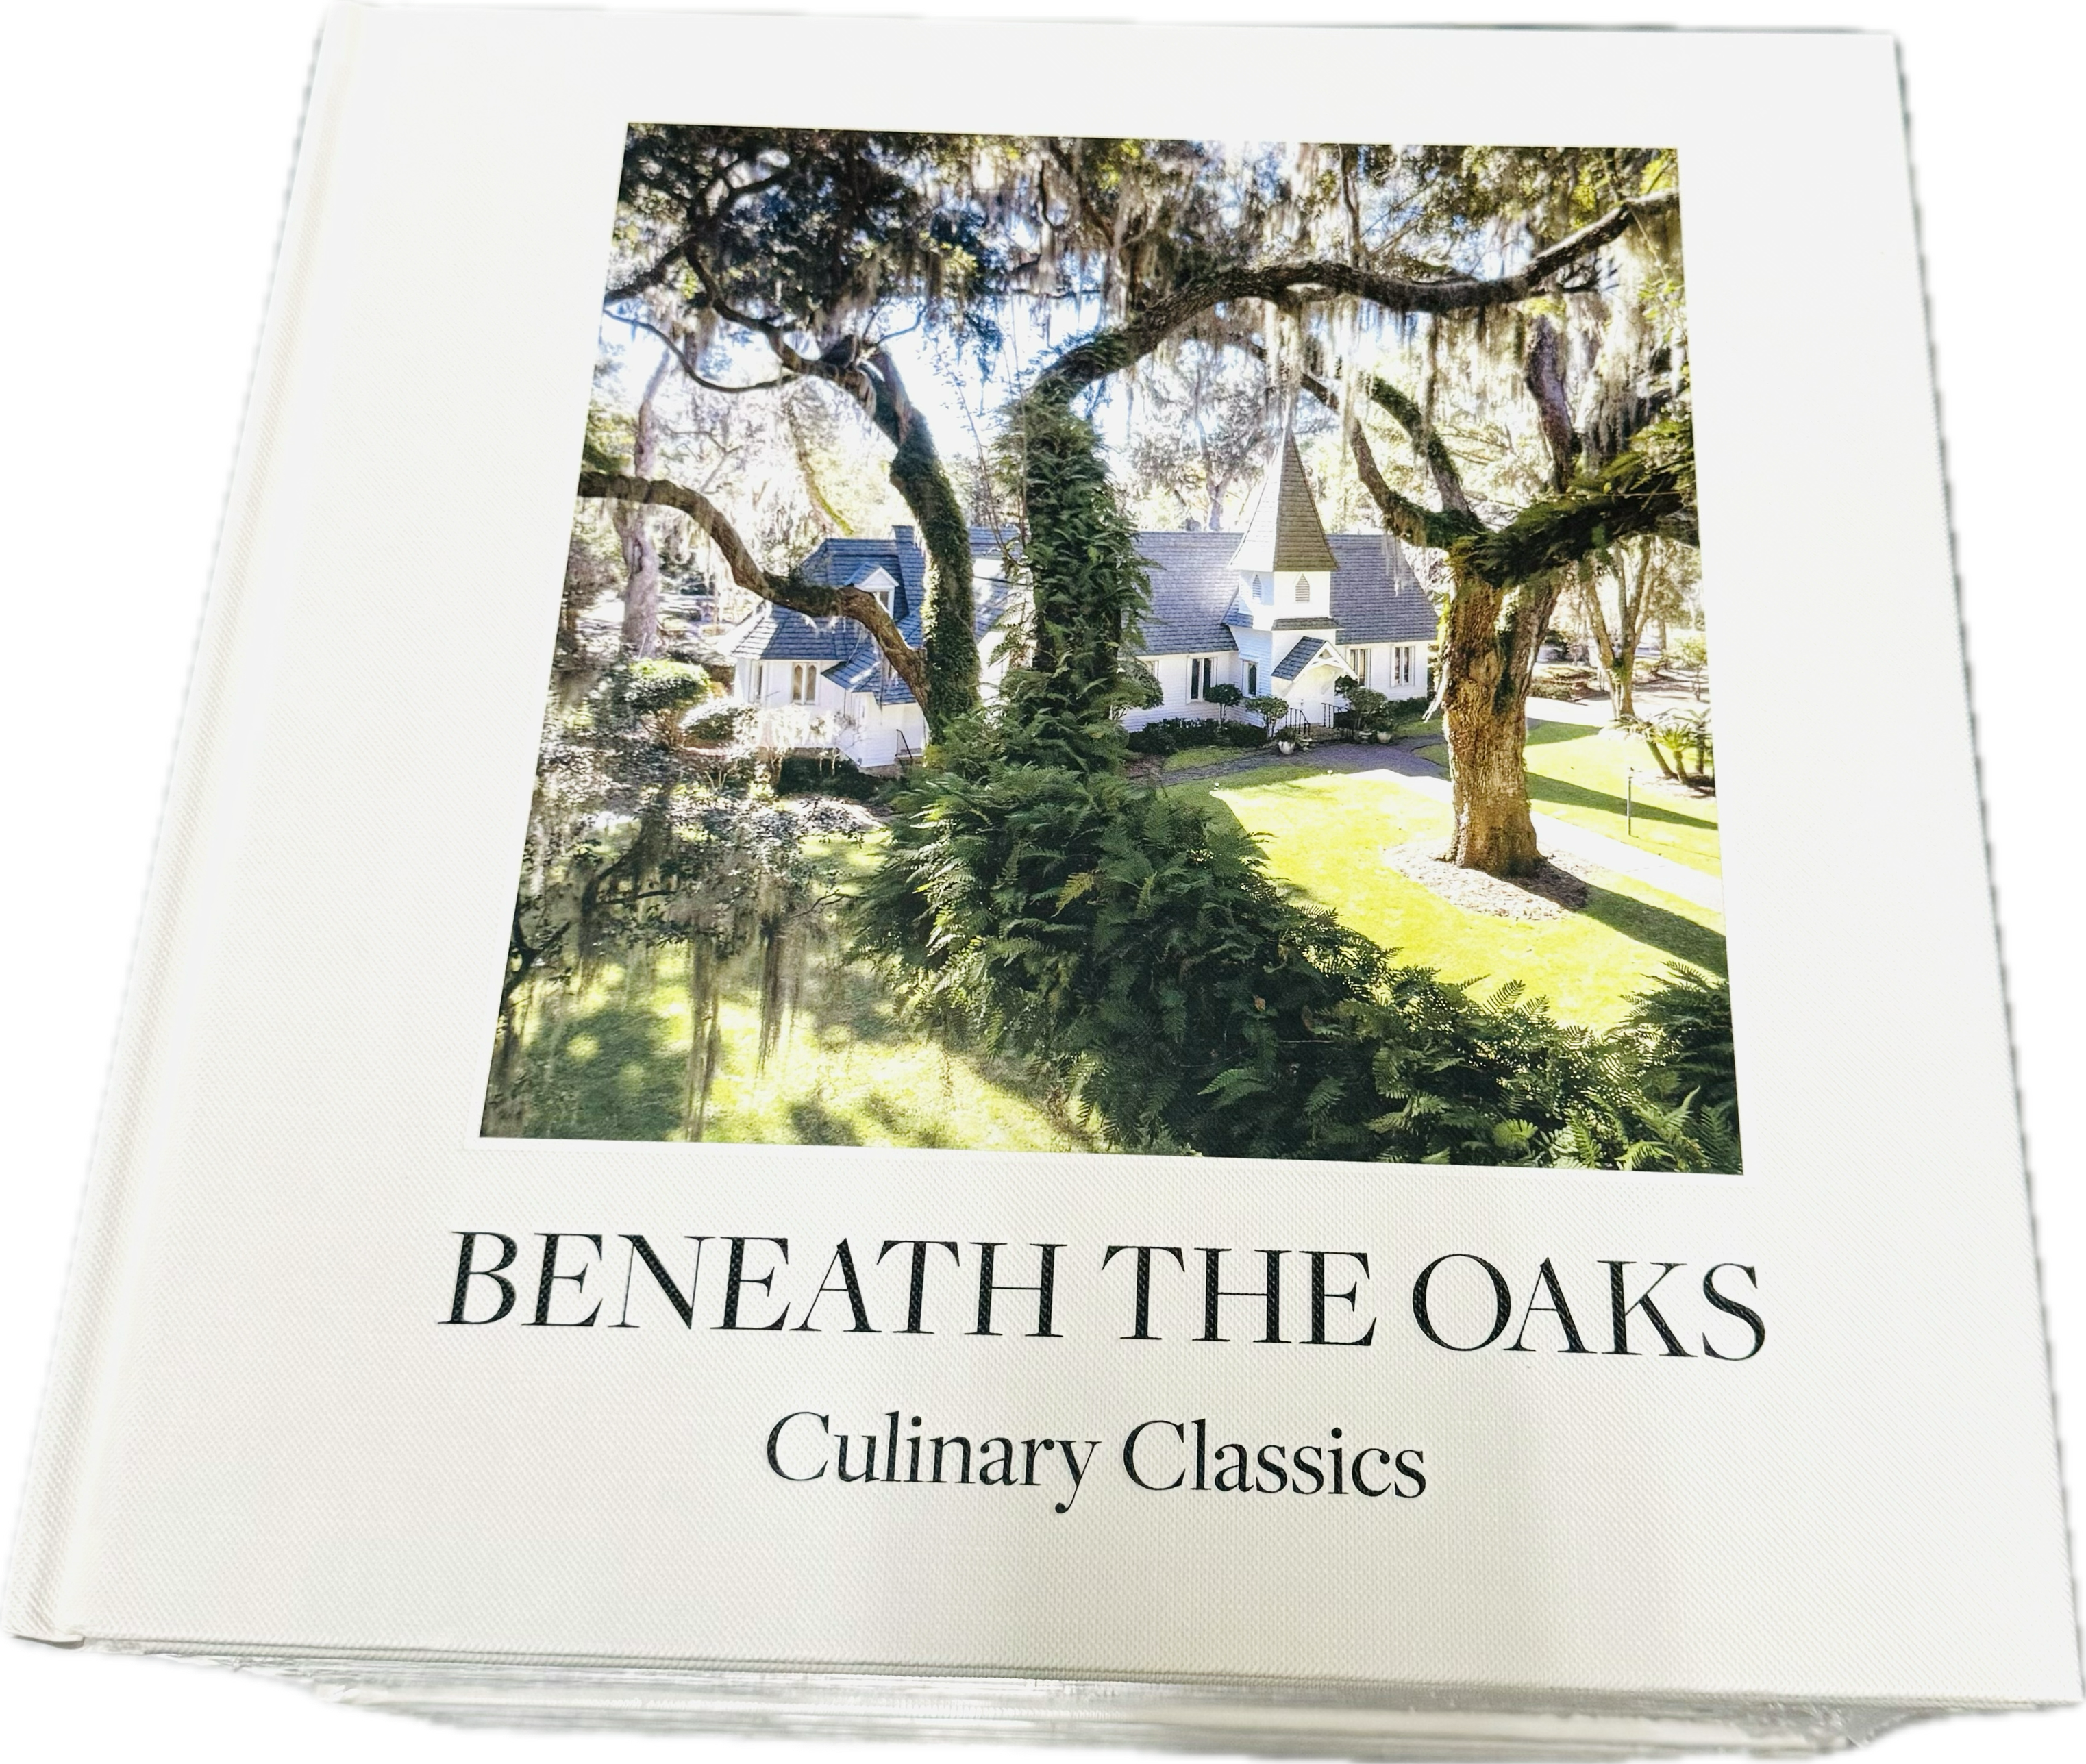 Beneath The Oaks Cookbook - Culinary Classics